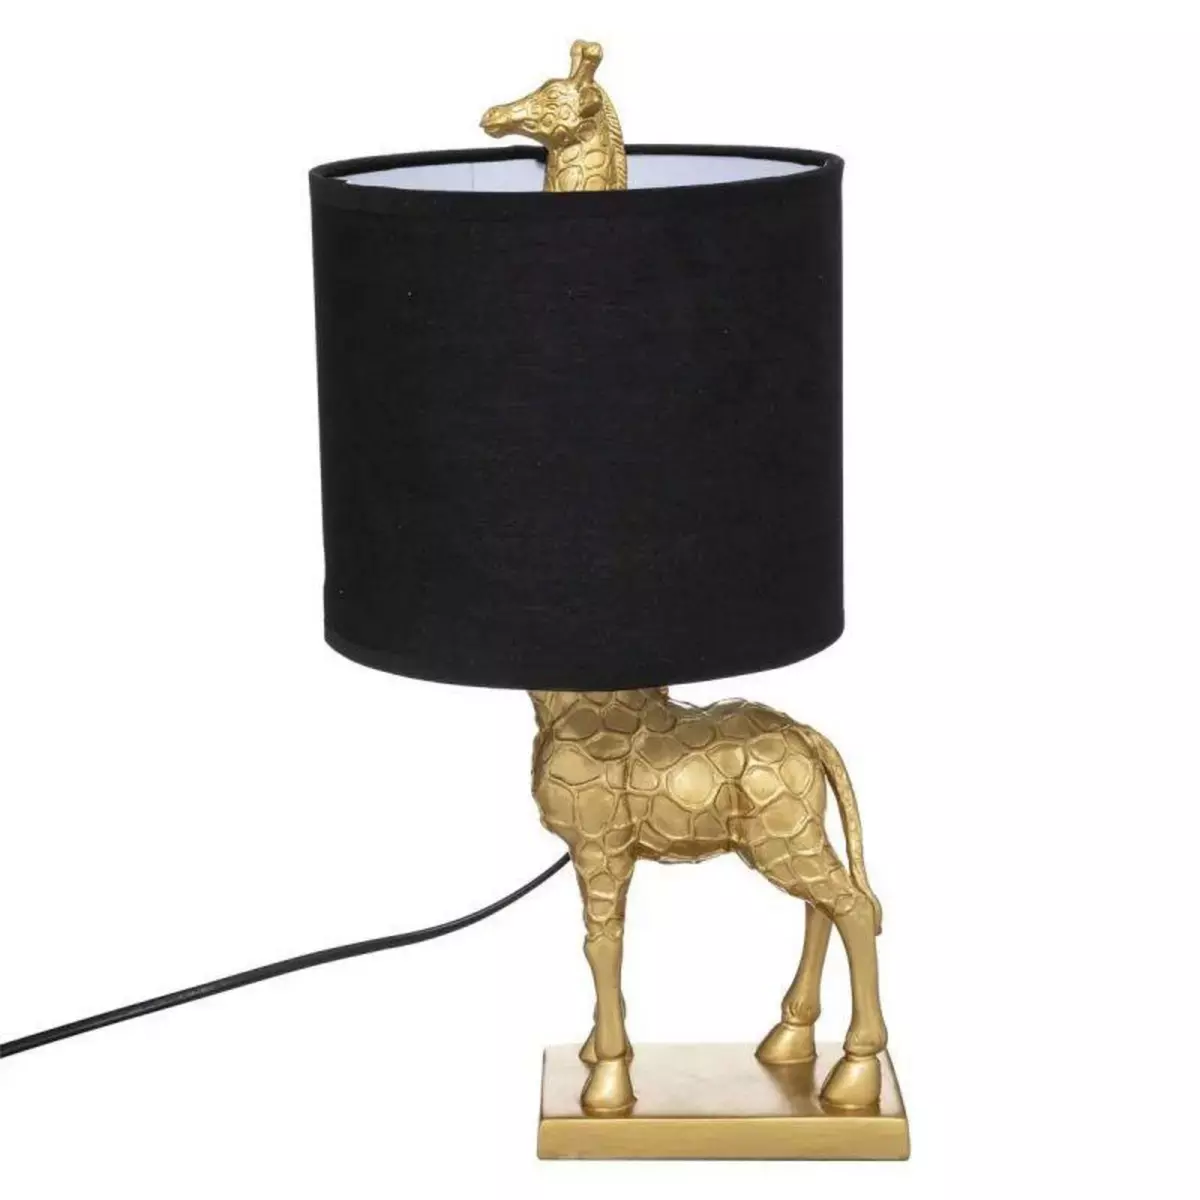  Lampe à Poser Design  Girafe  42cm Or & Noir